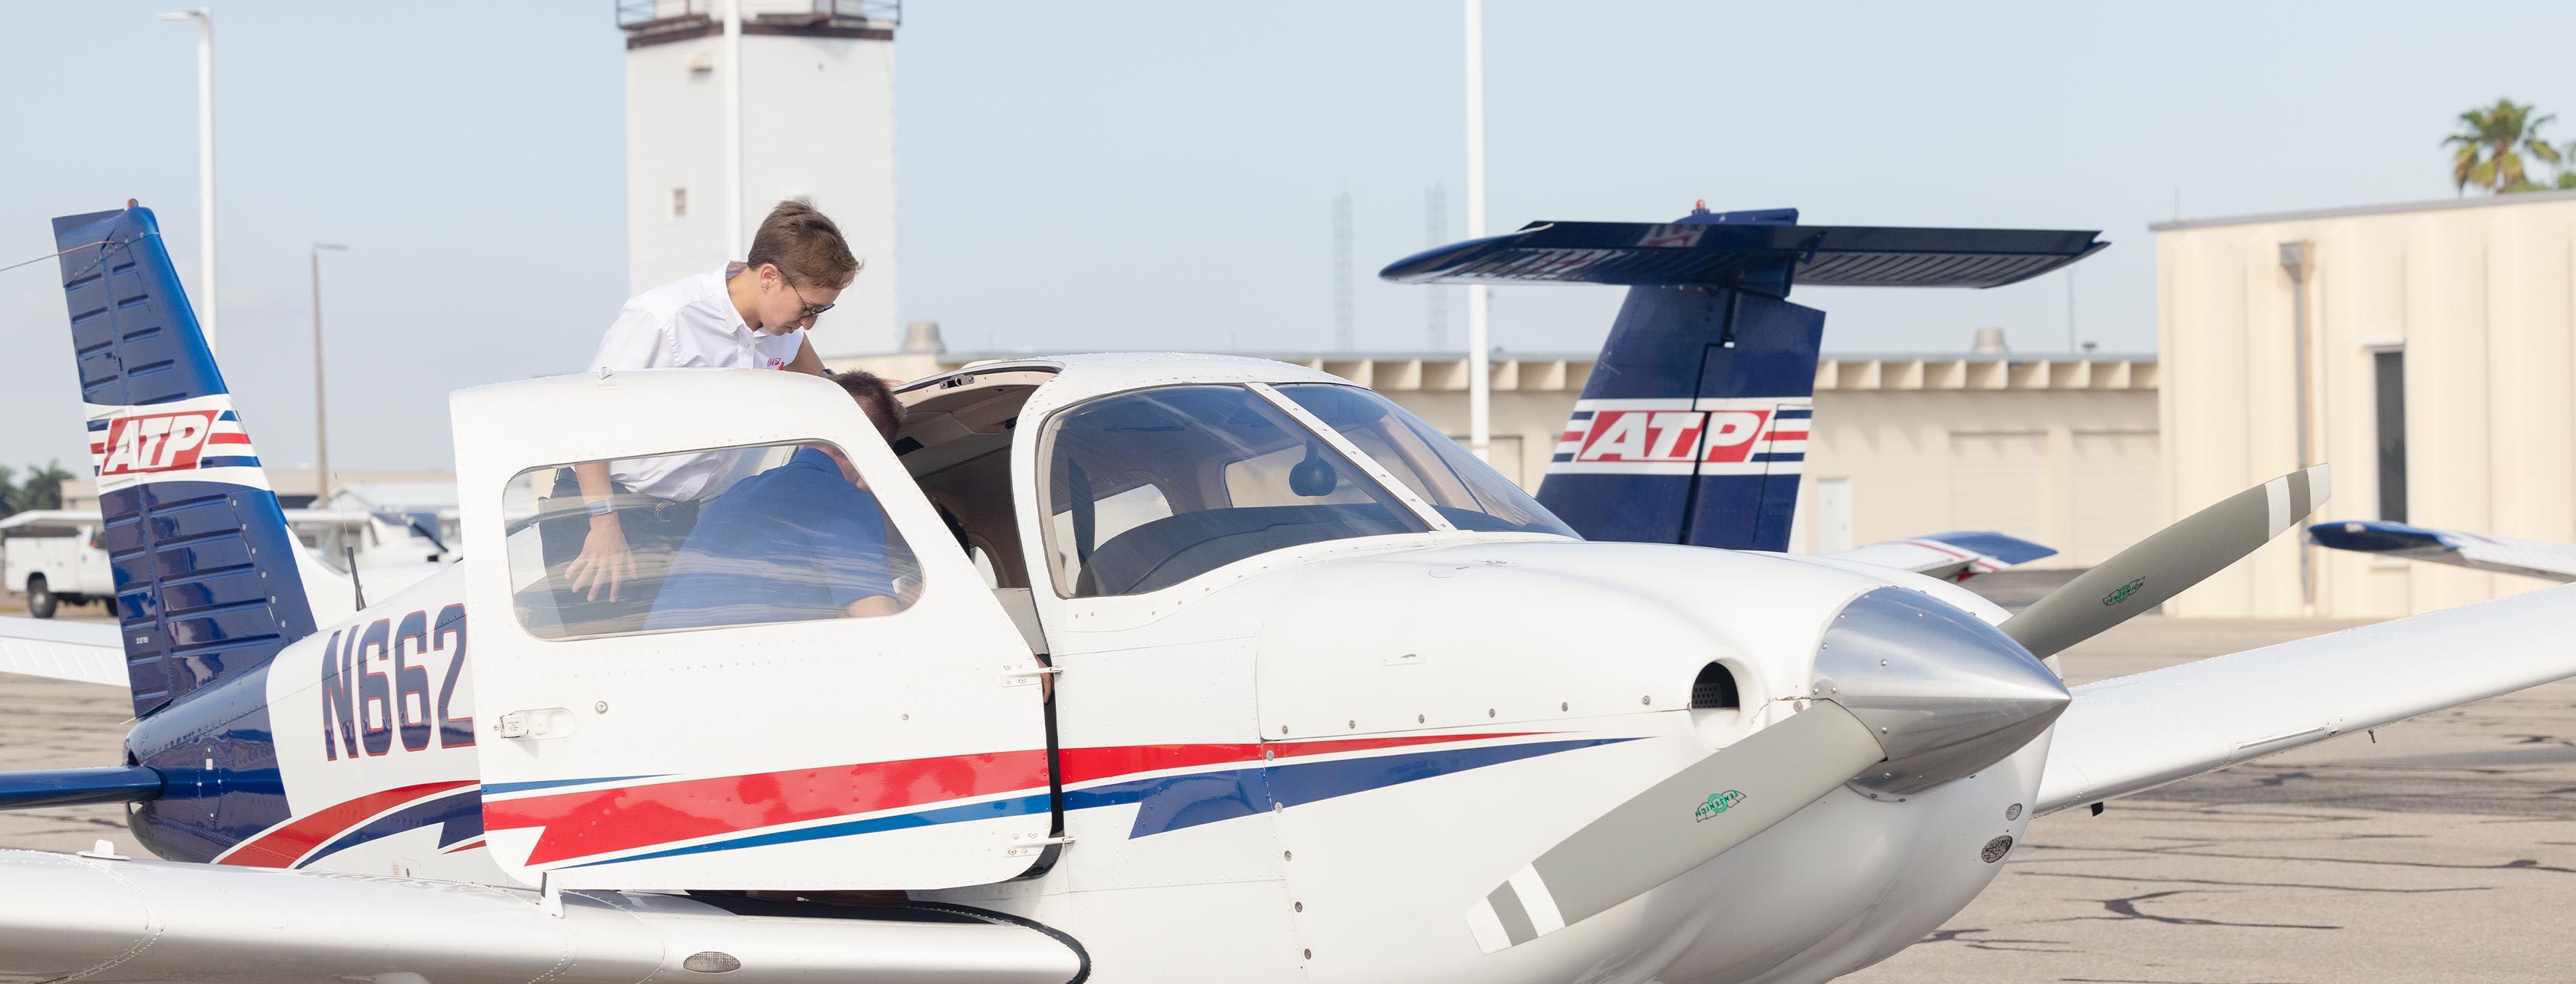 Certified Flight Instructor Teaches ATP Flight School Student